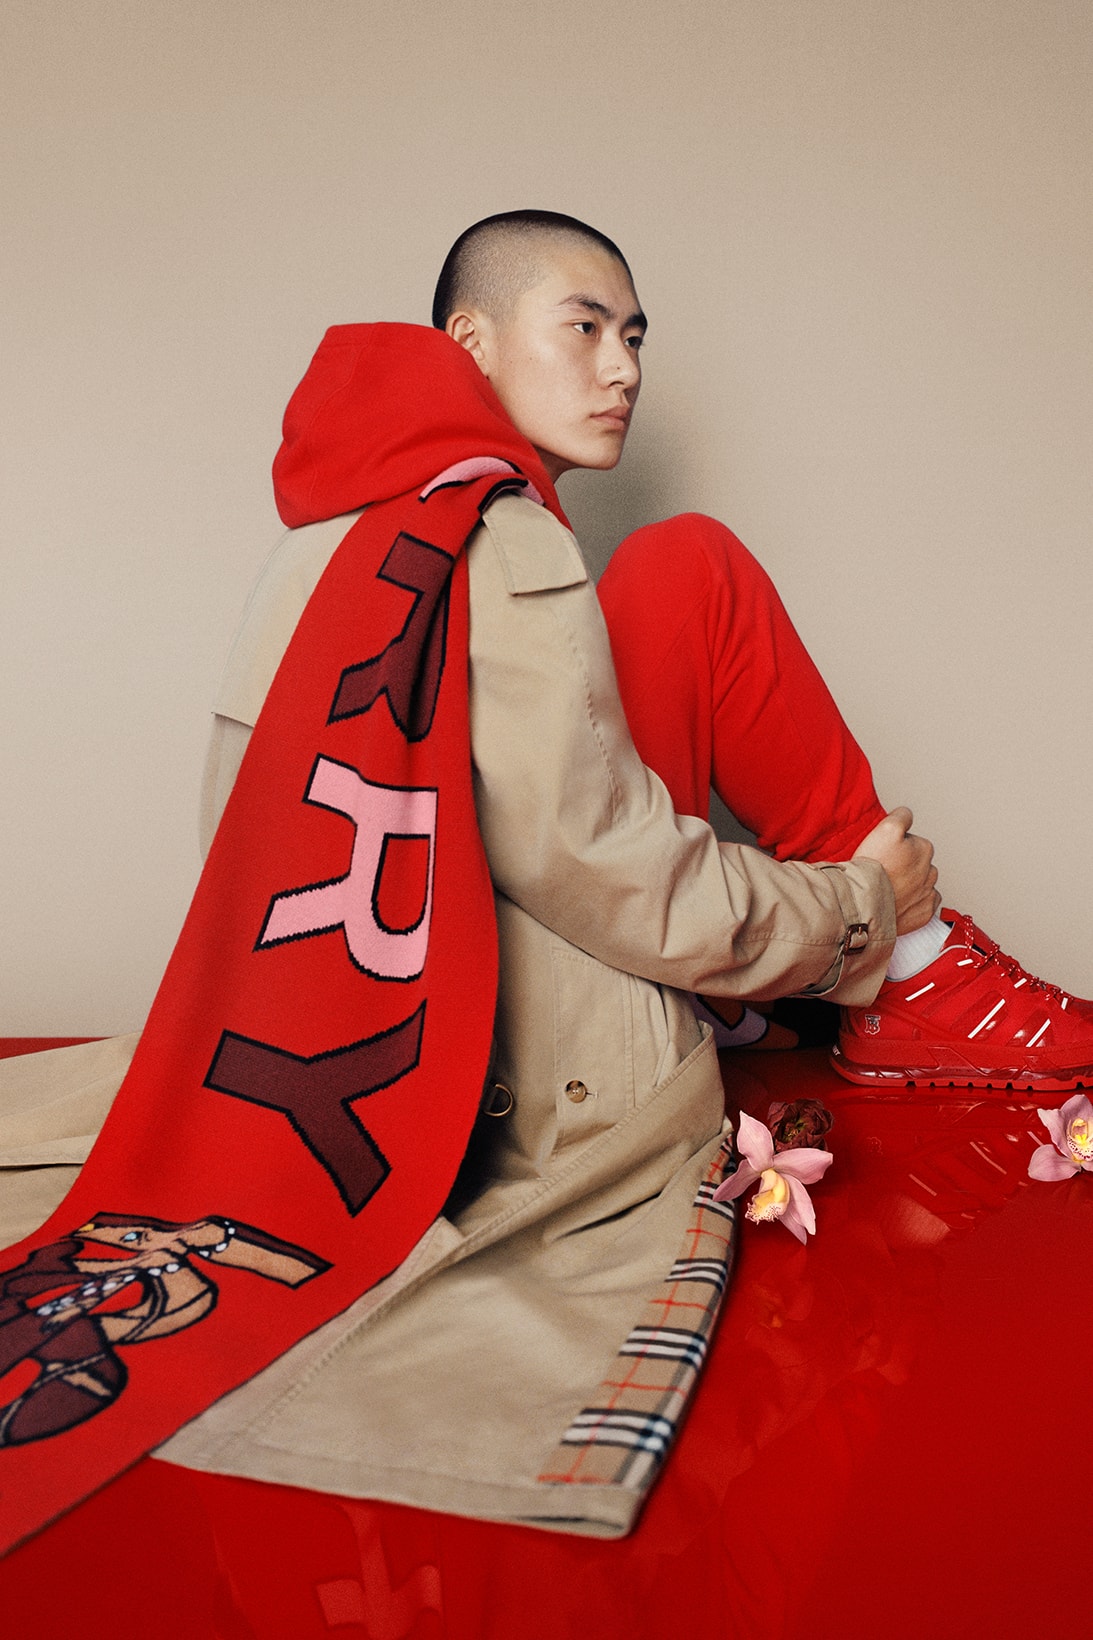 burberry chinese new year 2020 campaign union sneaker lola bag zhou dongyu liang jiyuan jackets scarf blazer red jewelry lola bag